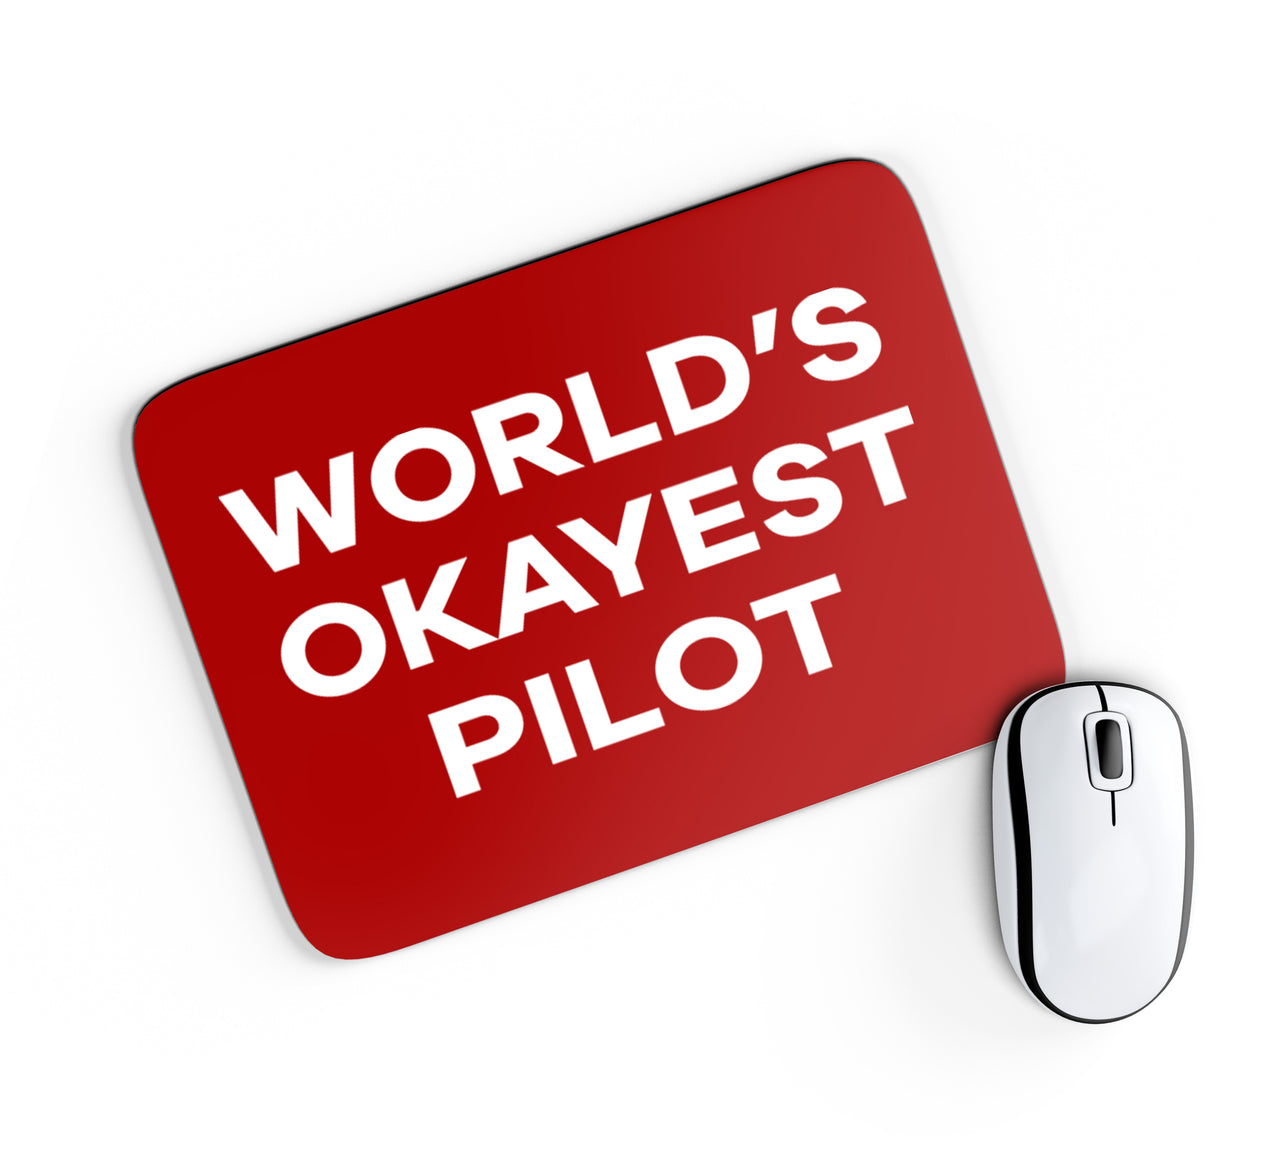 World's Okayest Pilot Designed Mouse Pads